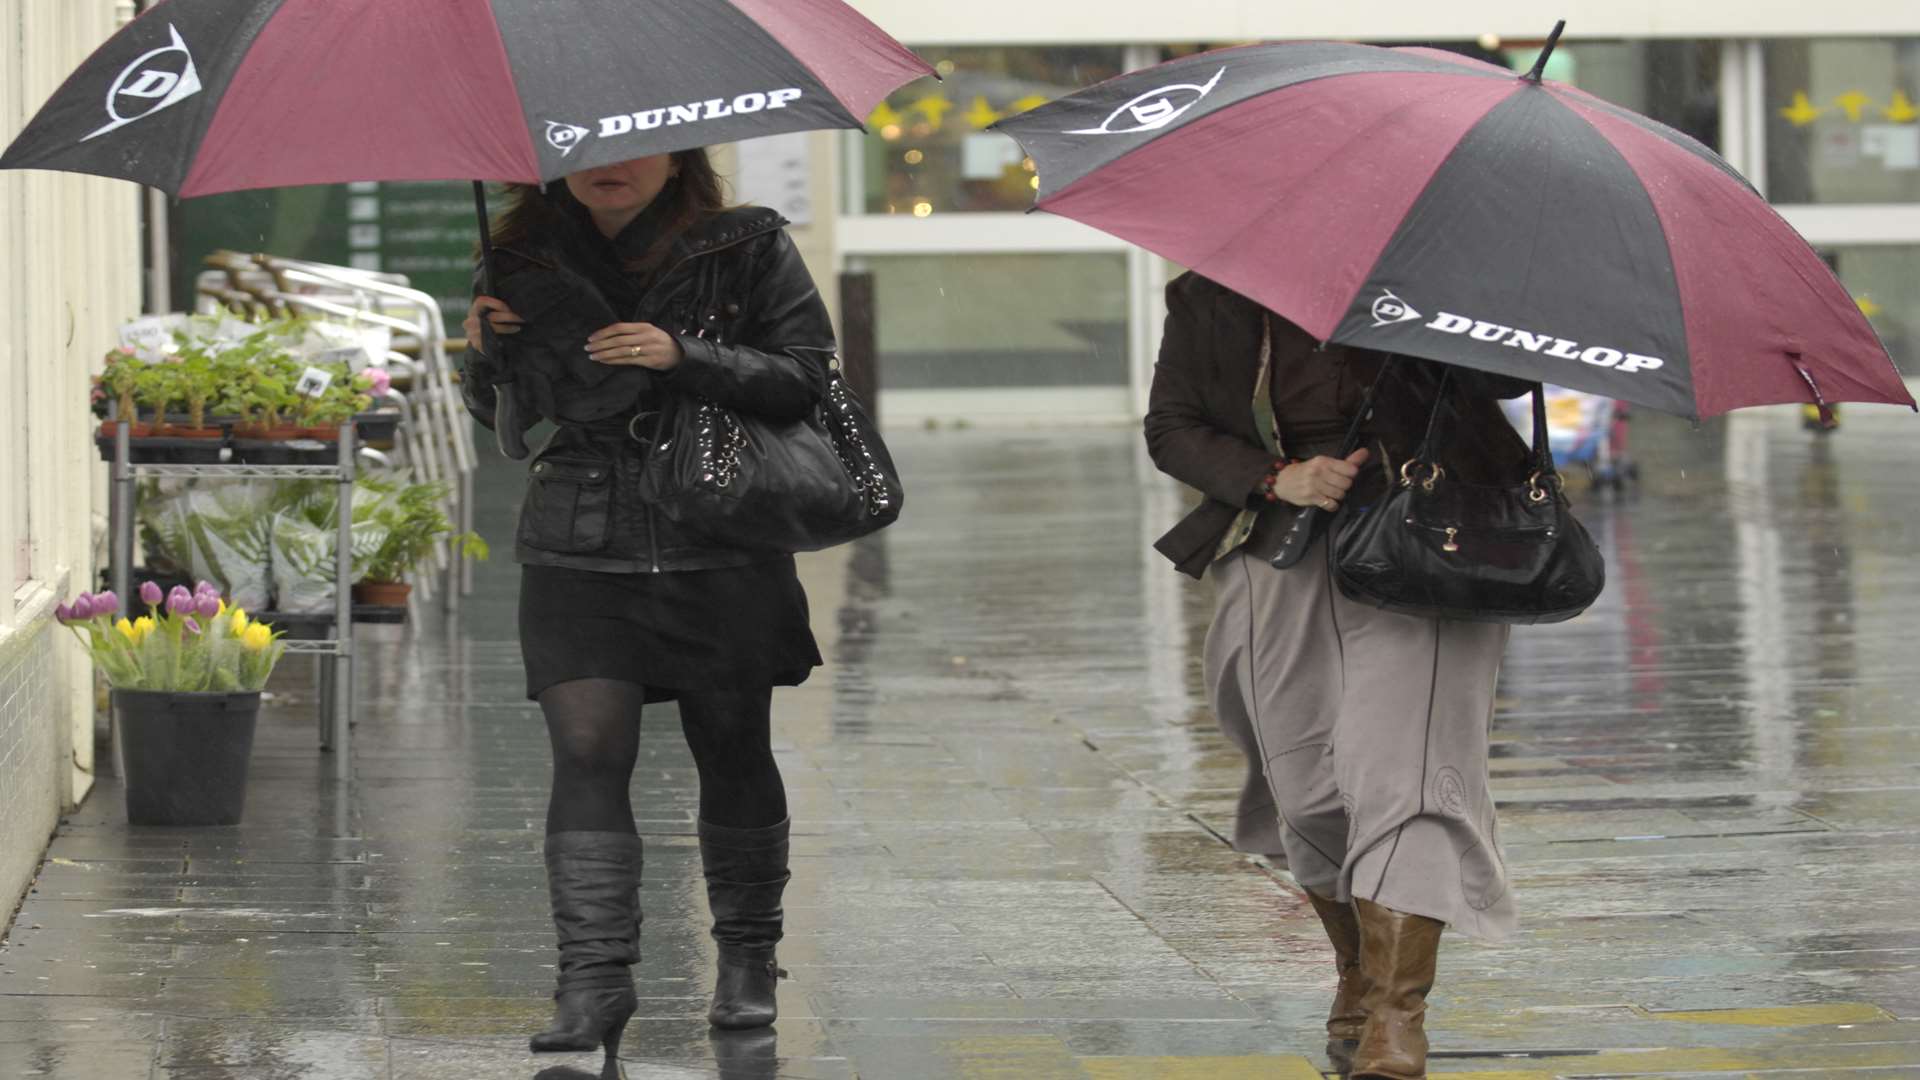 Shoppers braving the rain